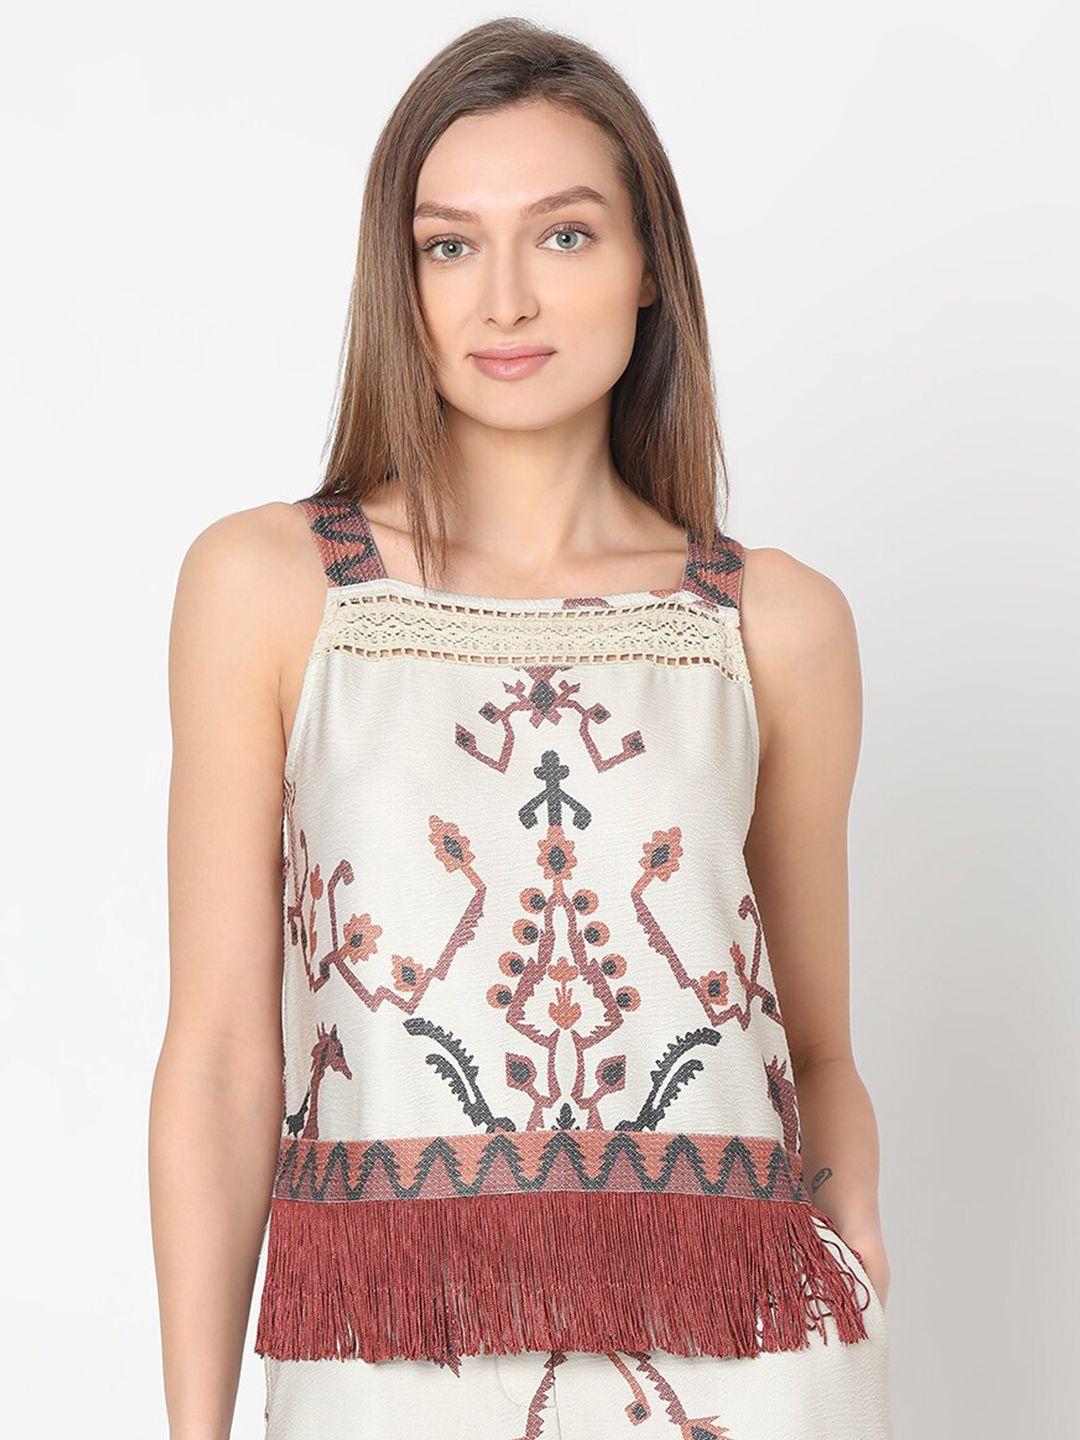 vero moda tribal or aztec printed shoulder straps fringed top